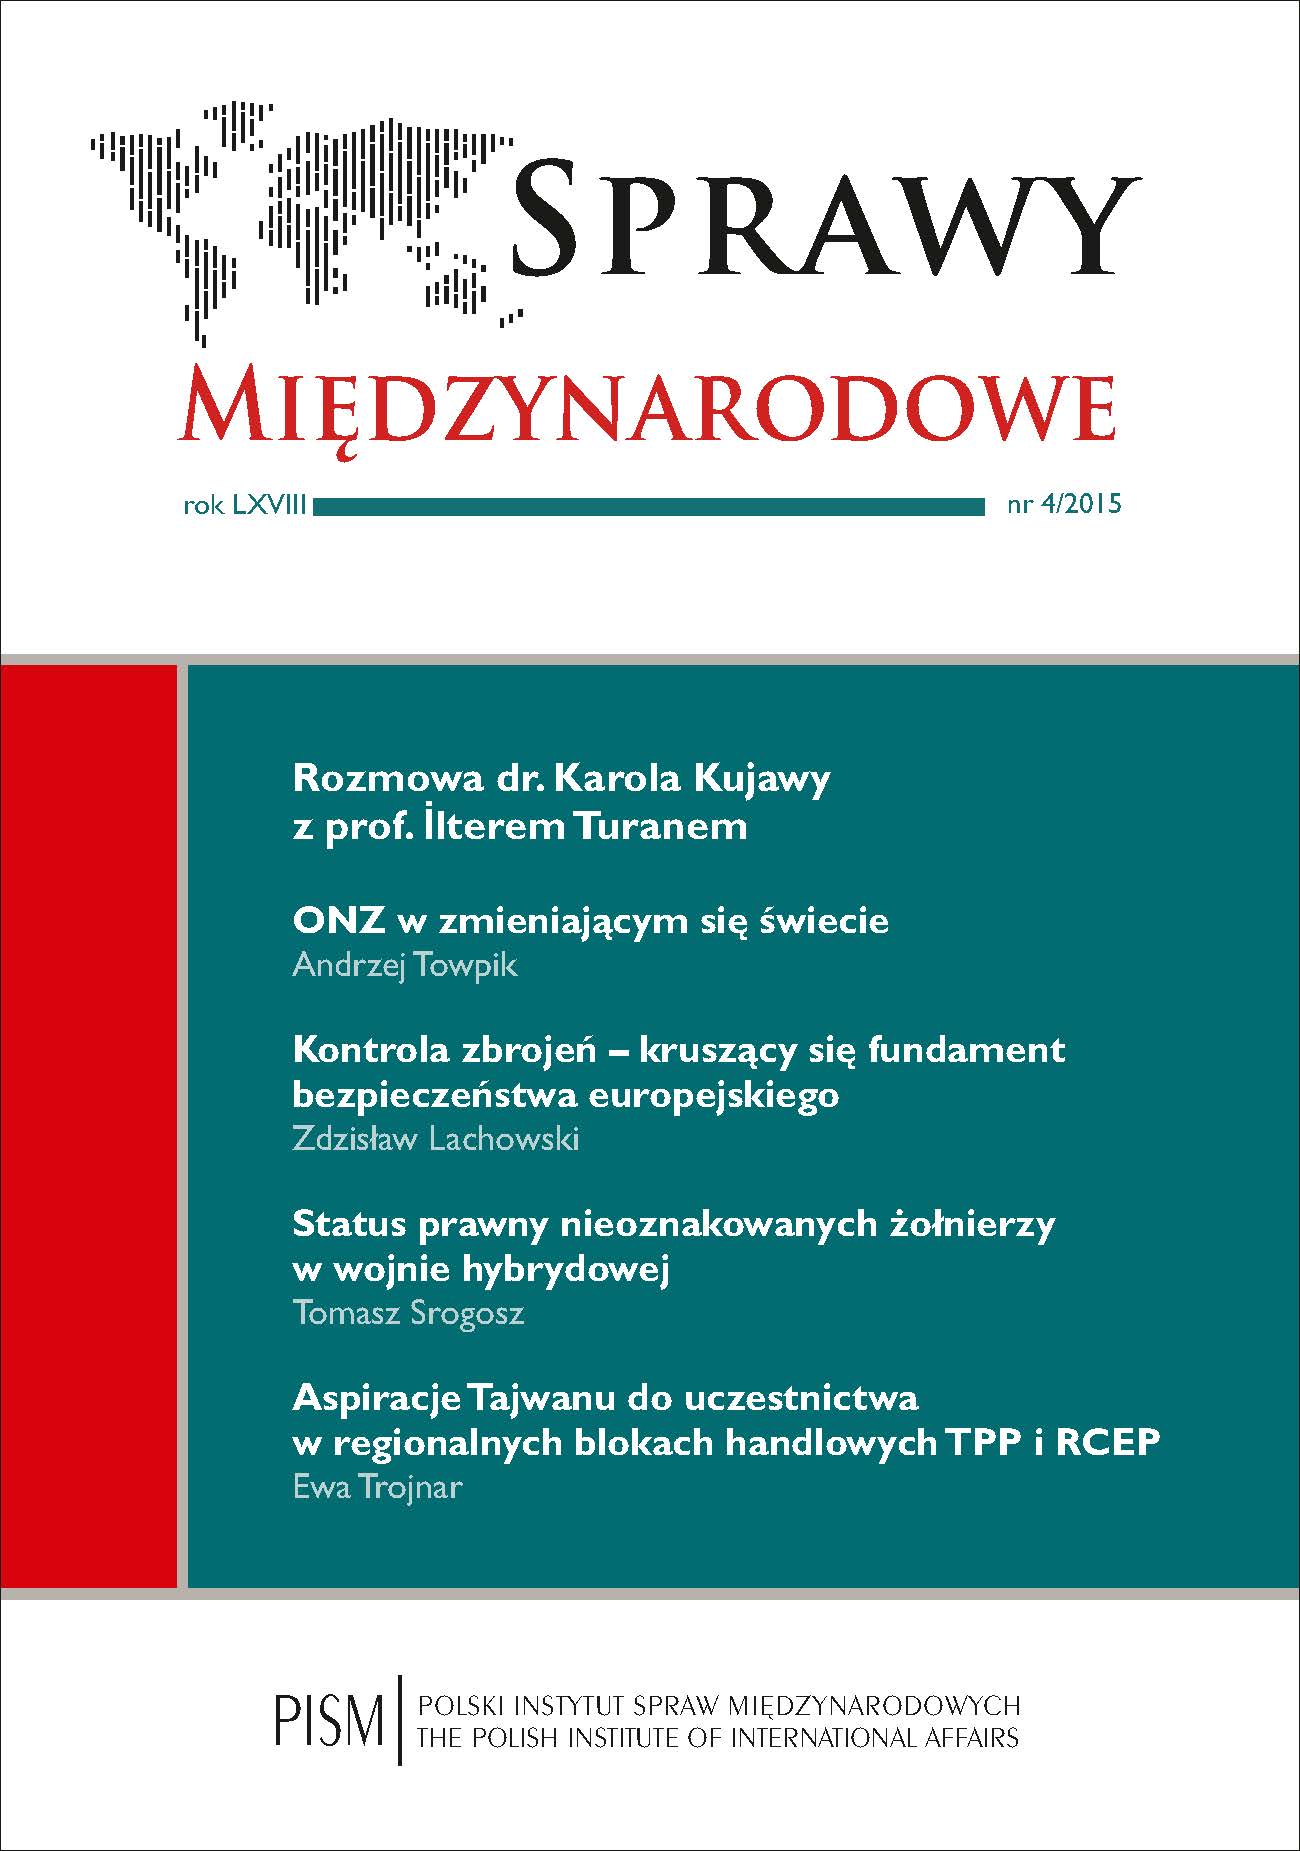 Poland’s Public Diplomacy Cover Image